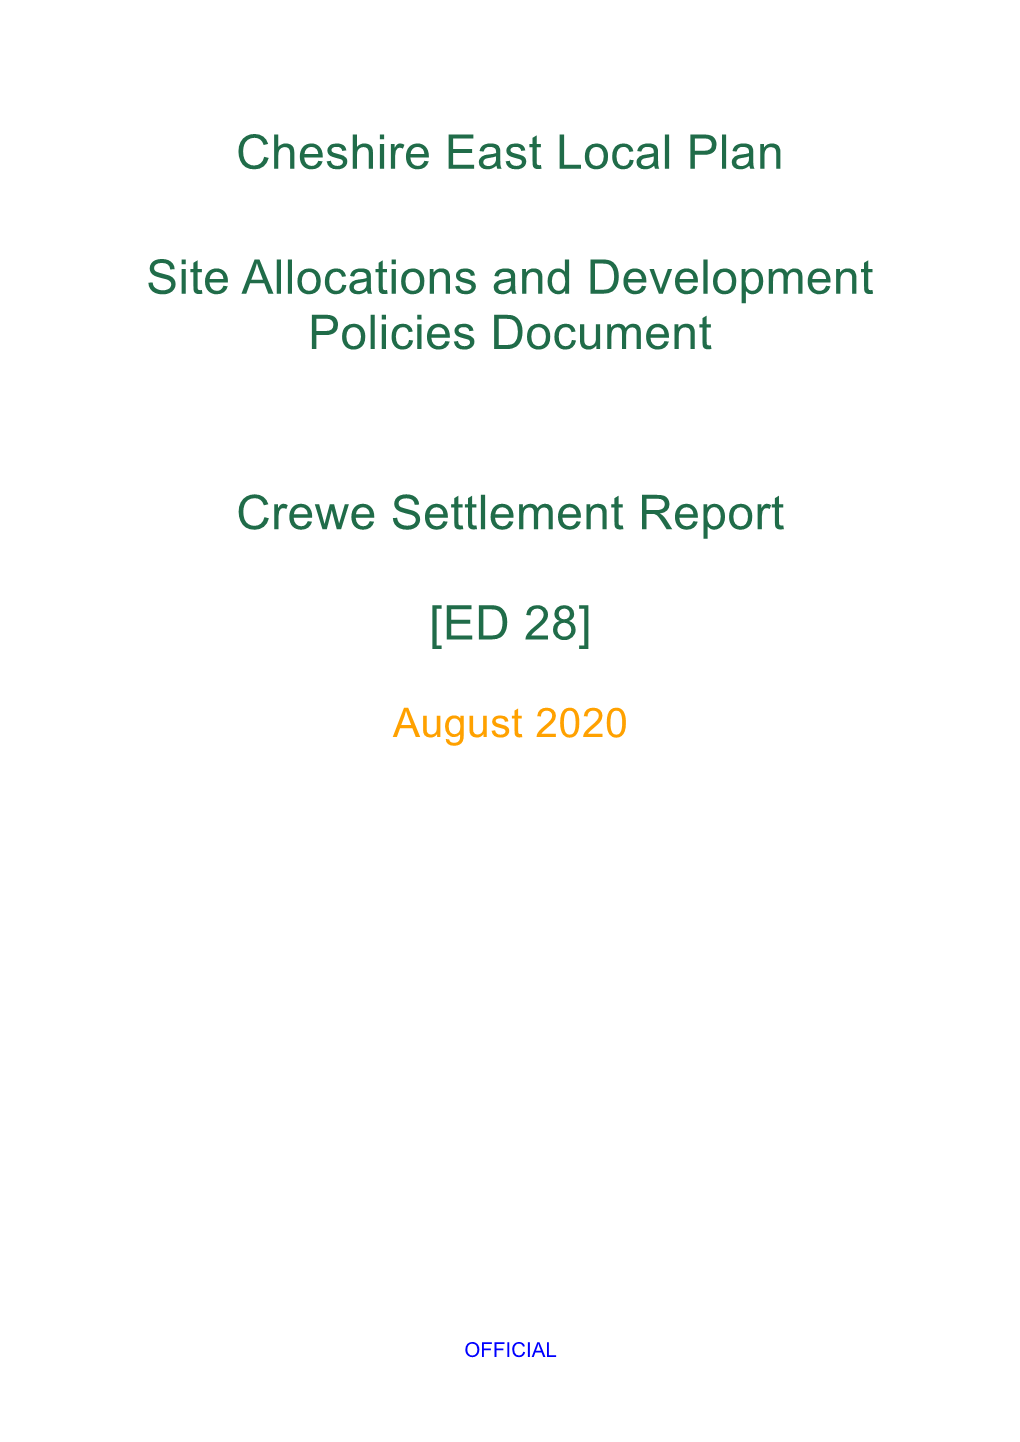 Crewe Settlement Report